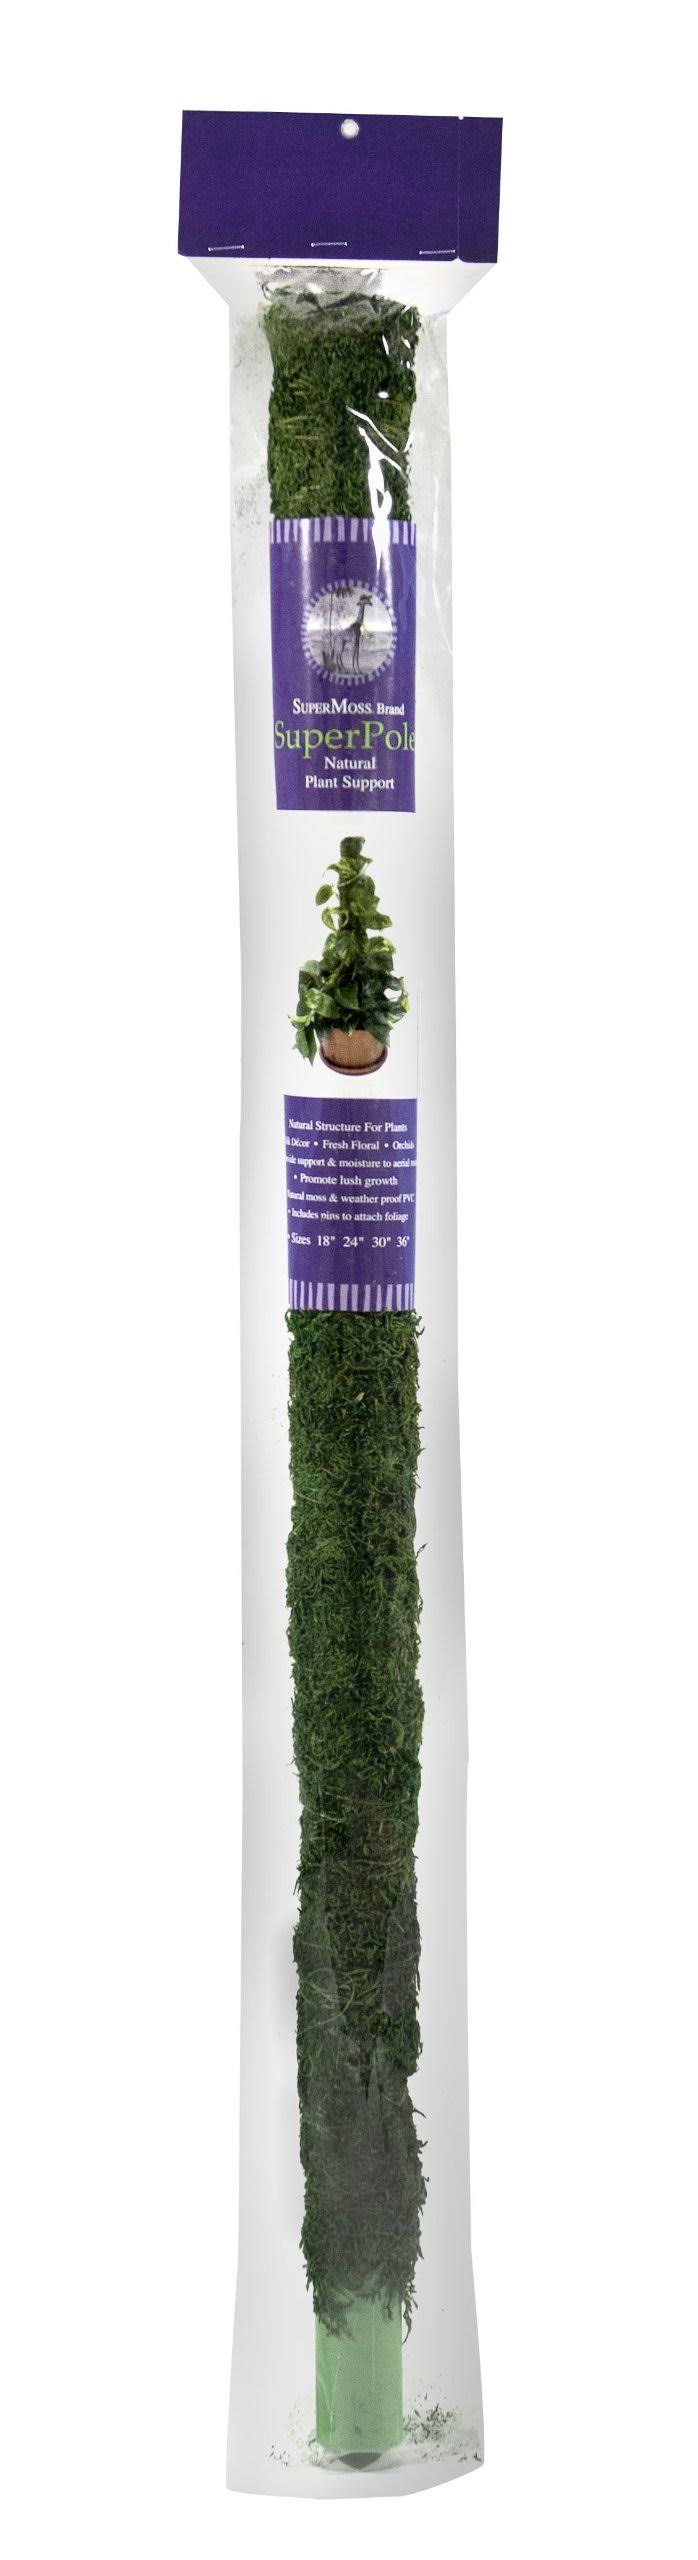 SuperMoss (22235) Moss Pole / Plant Stake, Fresh Green, 3ft.